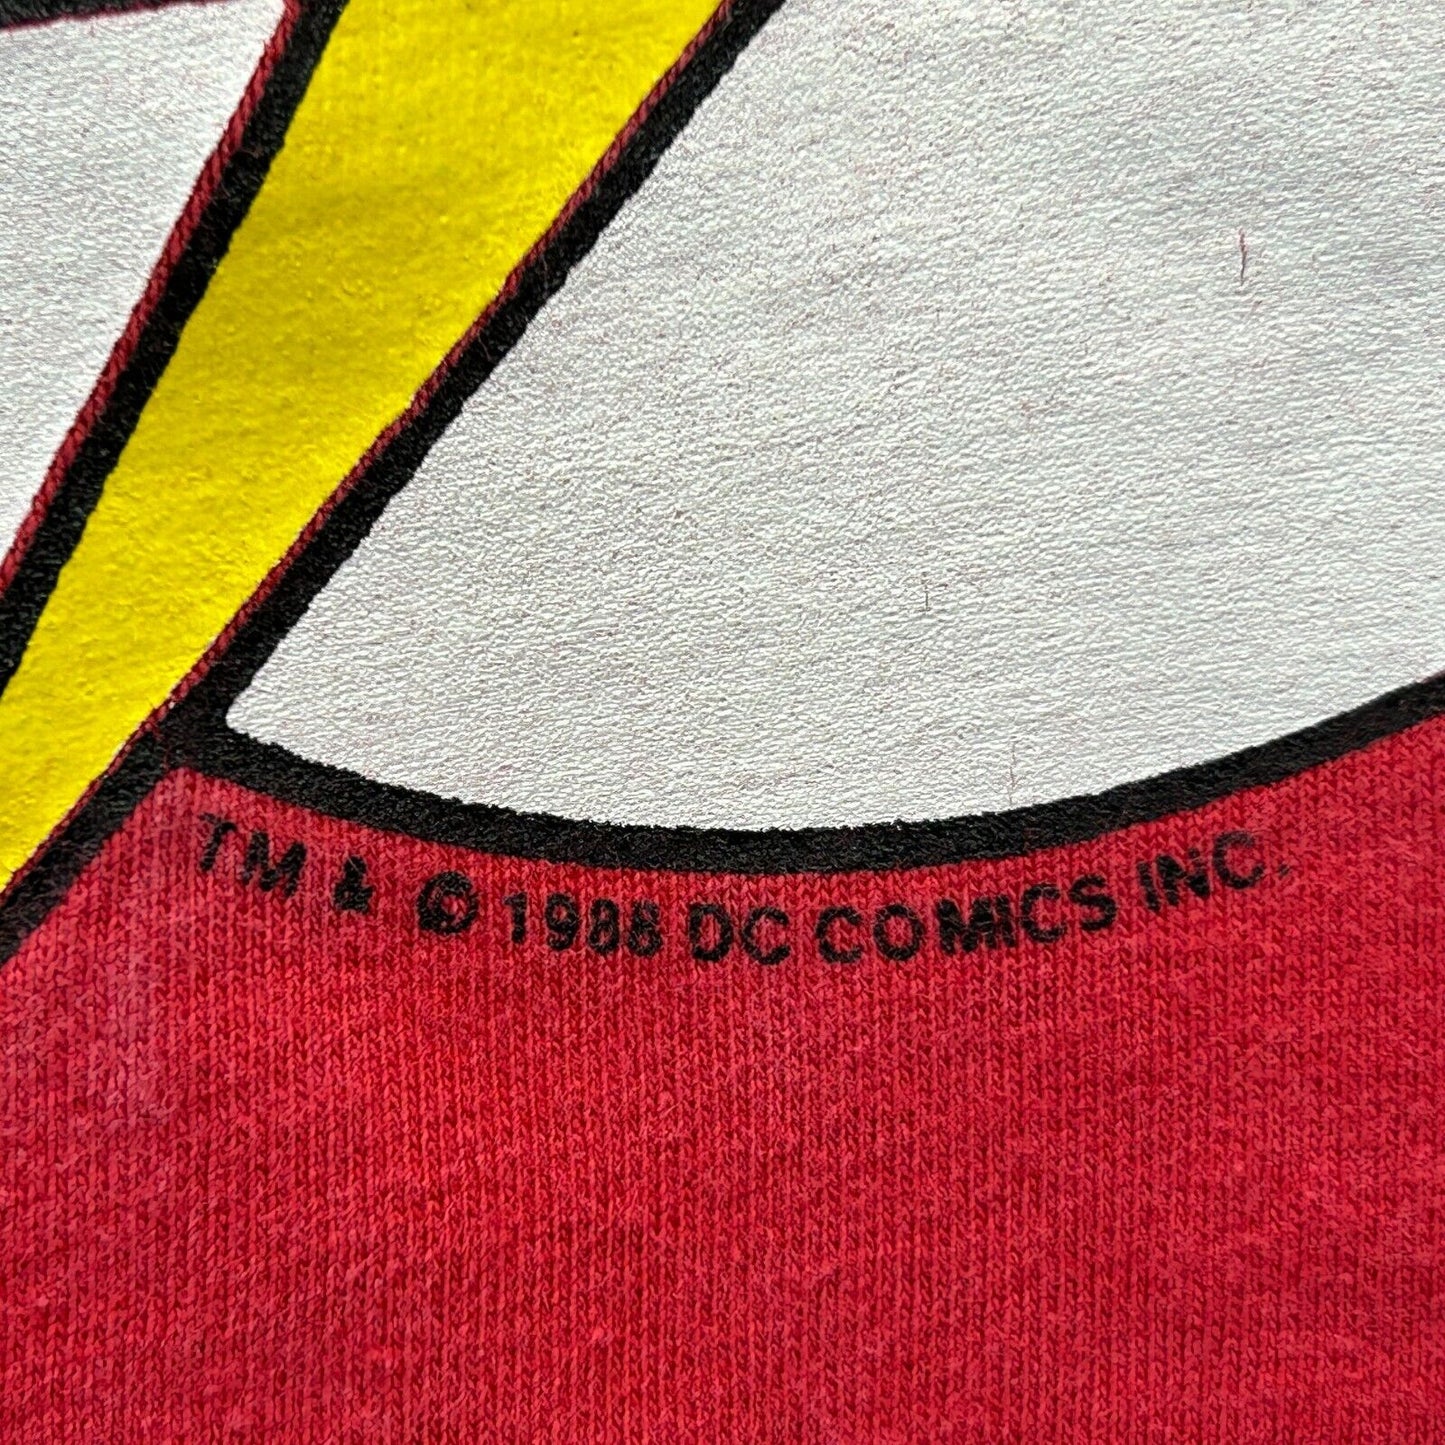 The Flash Logo Vintage 90s T Shirt XXL DC Comics Comic Book Long Sleeve Mens Red